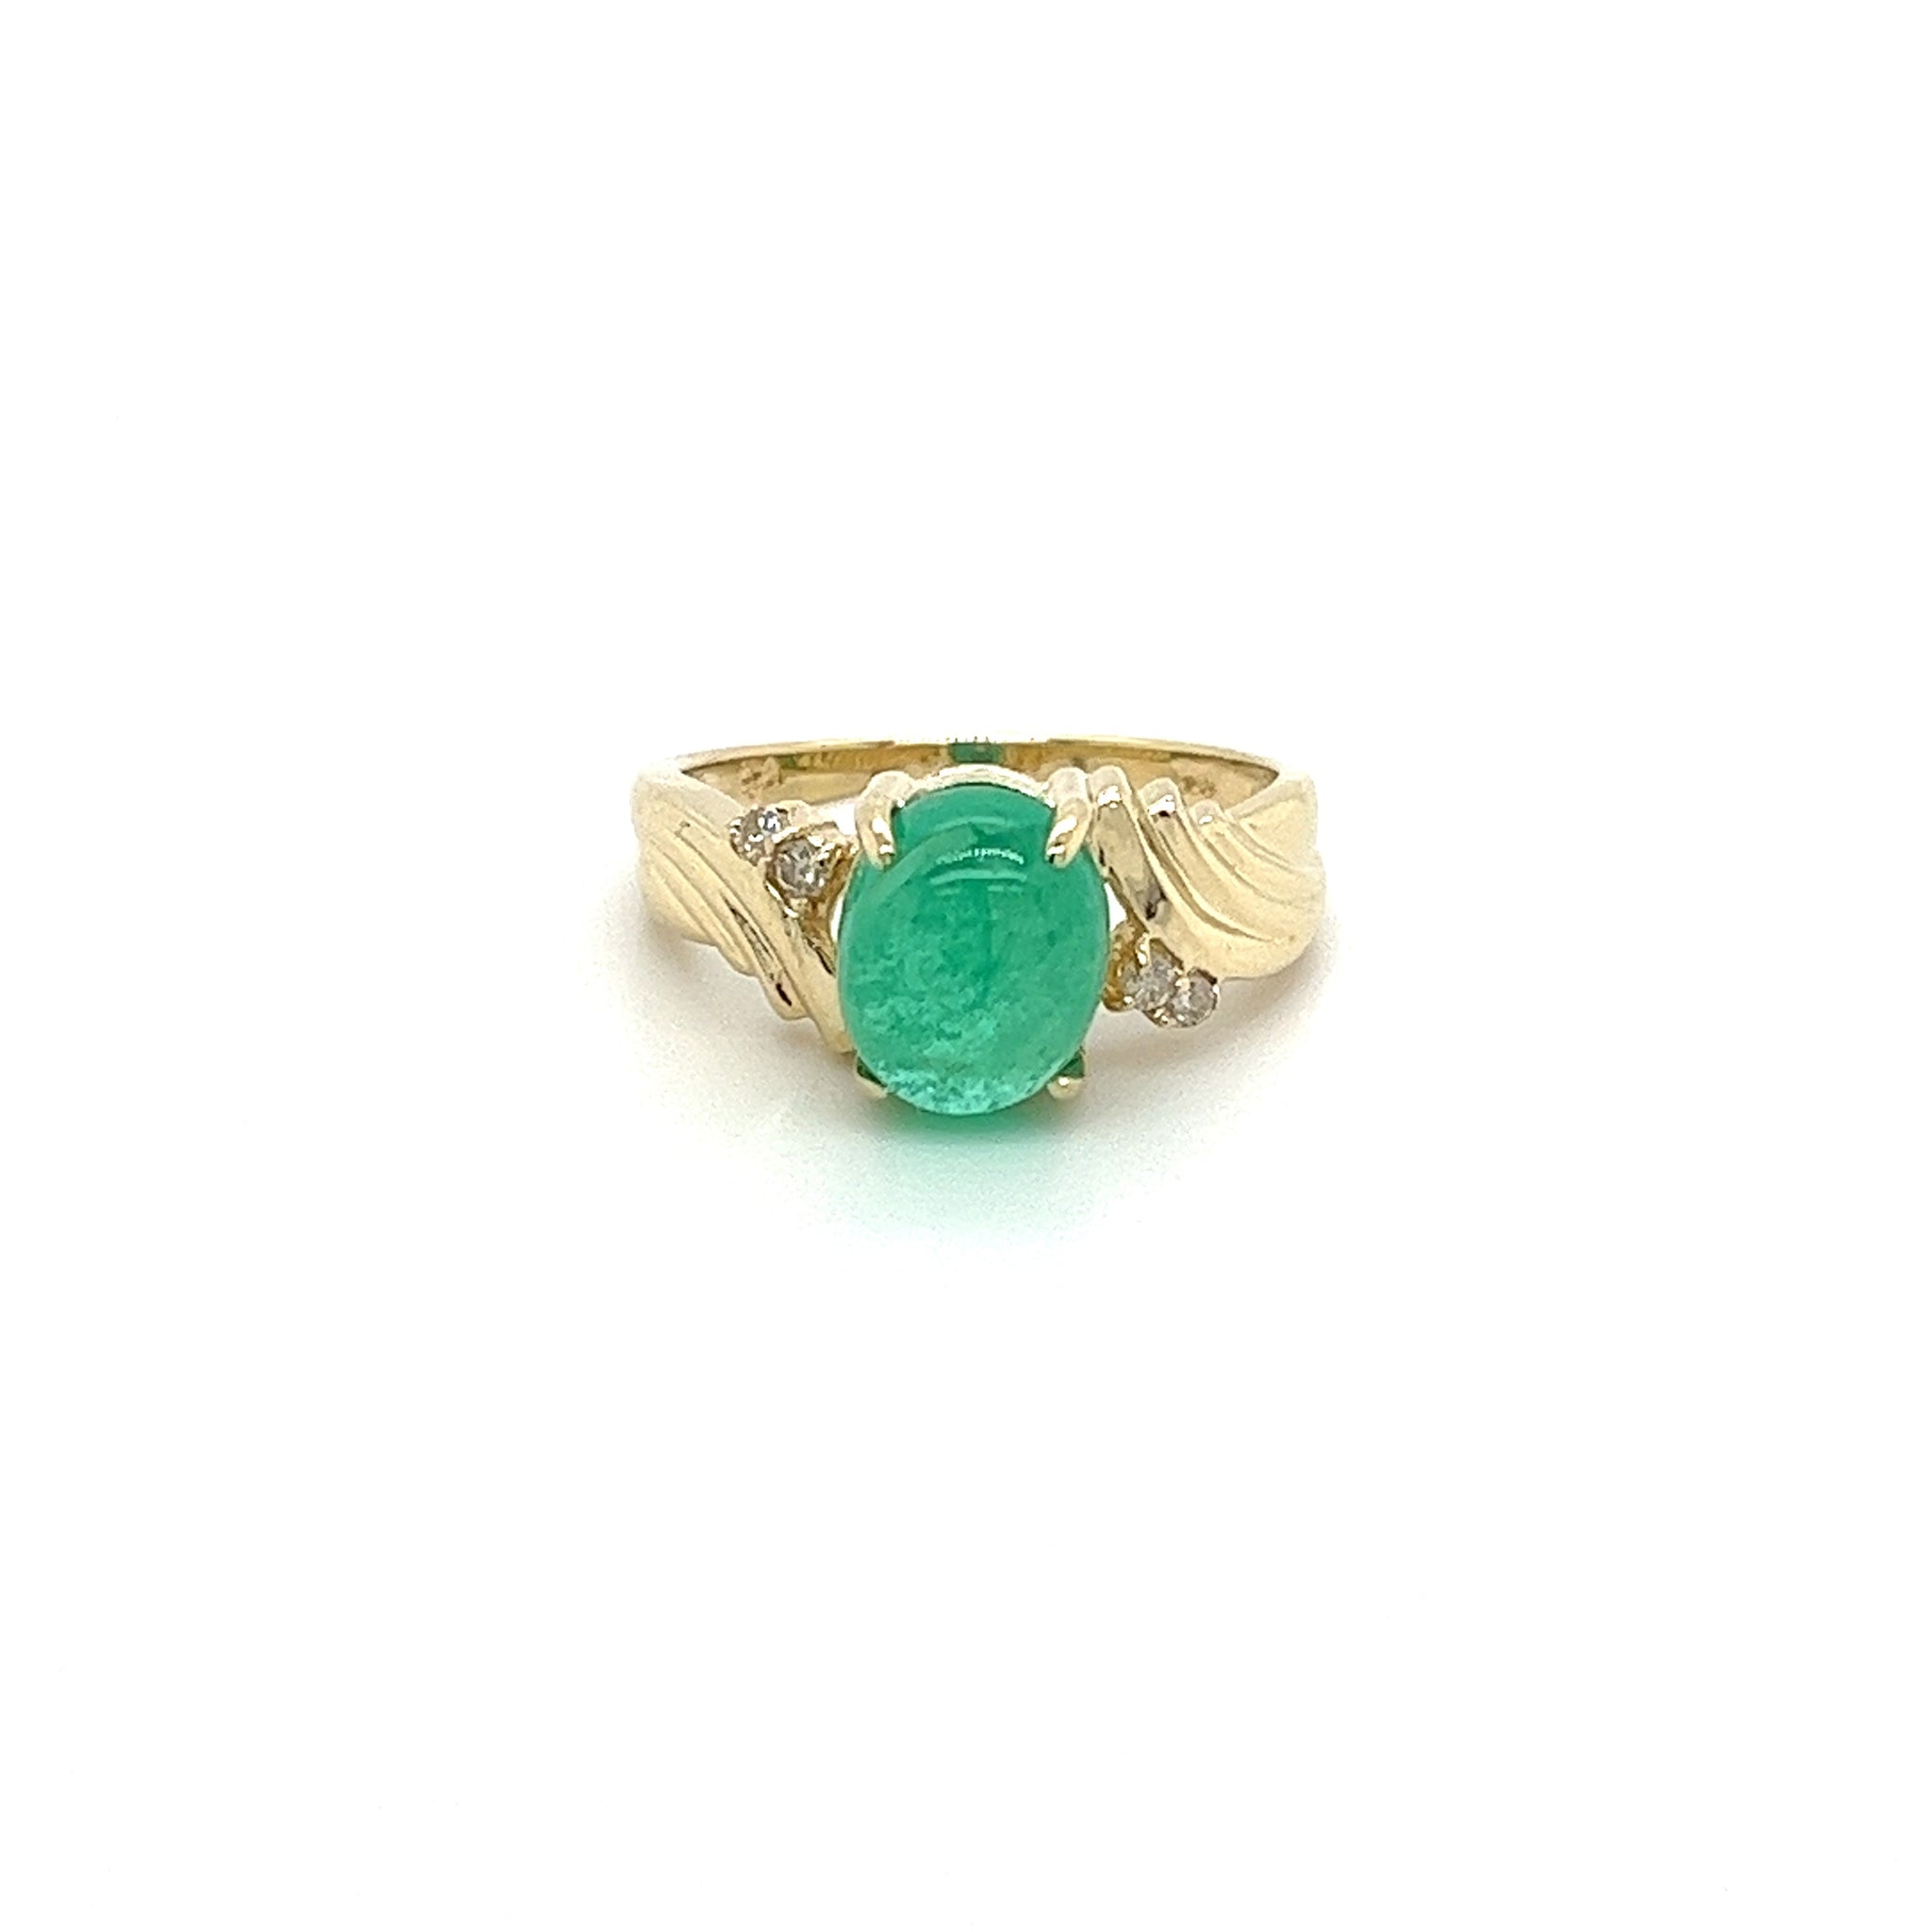 2 Carat Cabochon Cut Natural Emerald & Diamond in Textured 14K Yellow Gold Ring